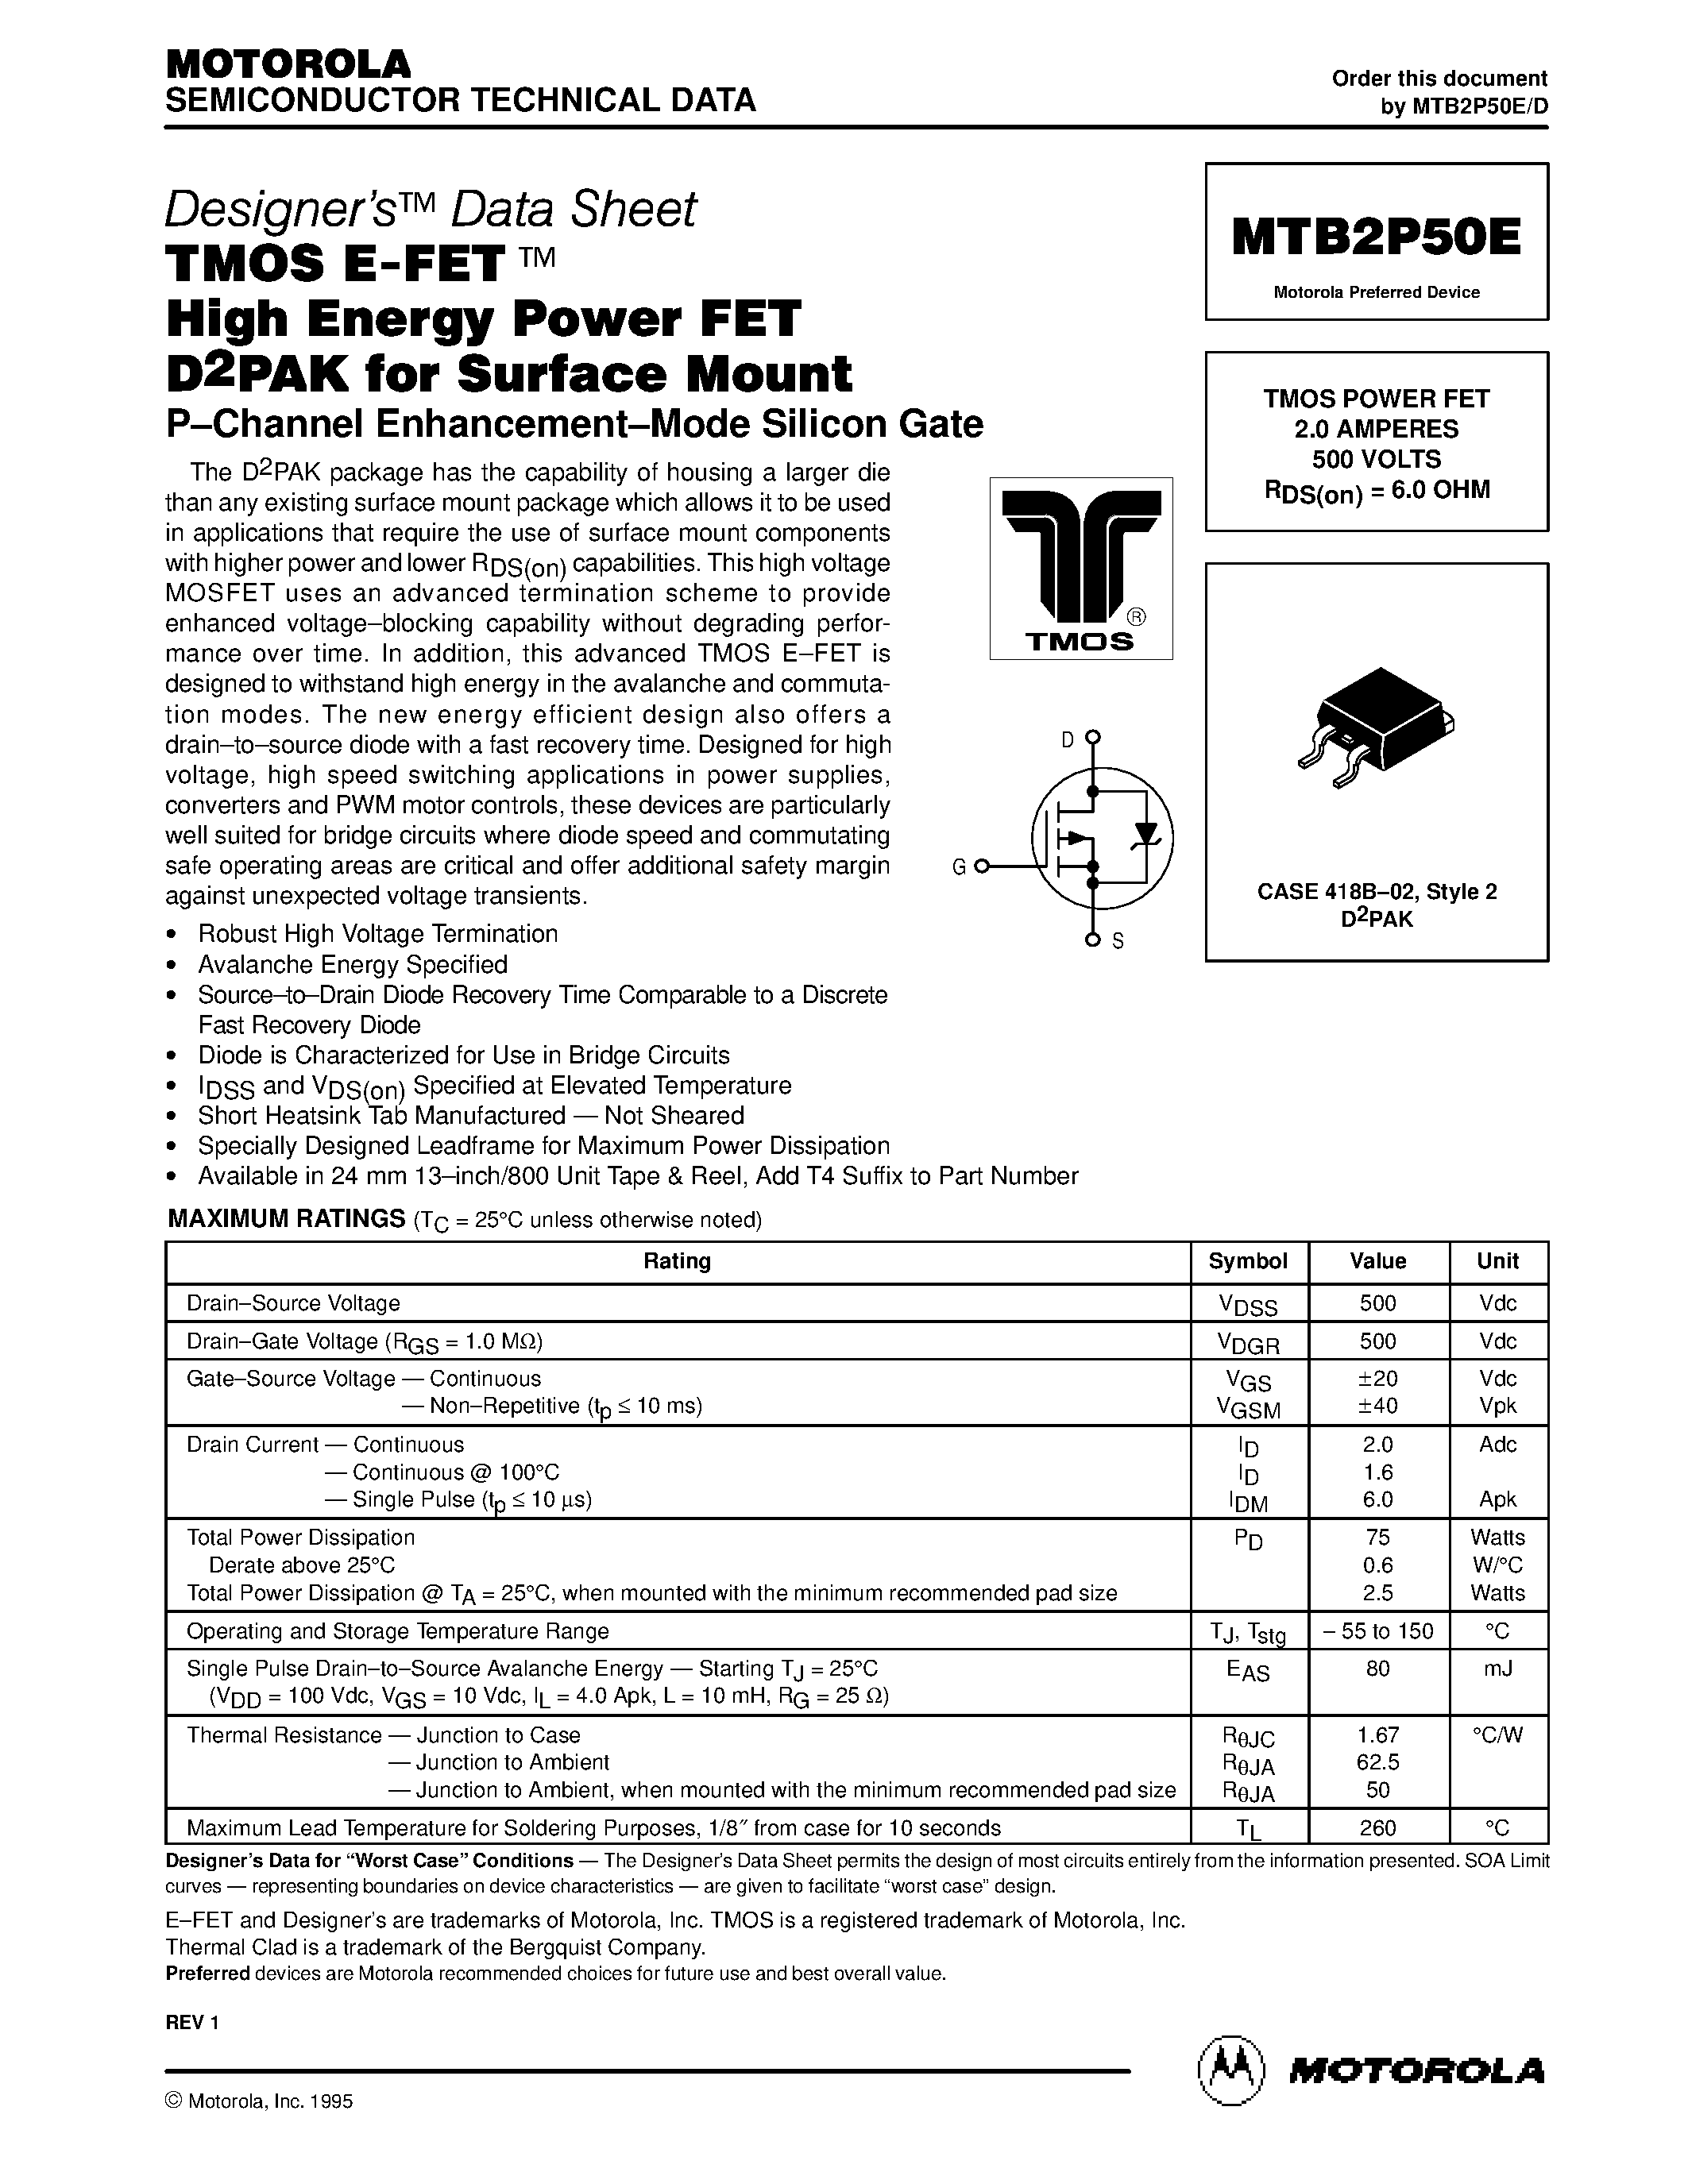 Даташит MTB2P50E - TMOS POWER FET 2.0 AMPERES 500 VOLTS страница 1